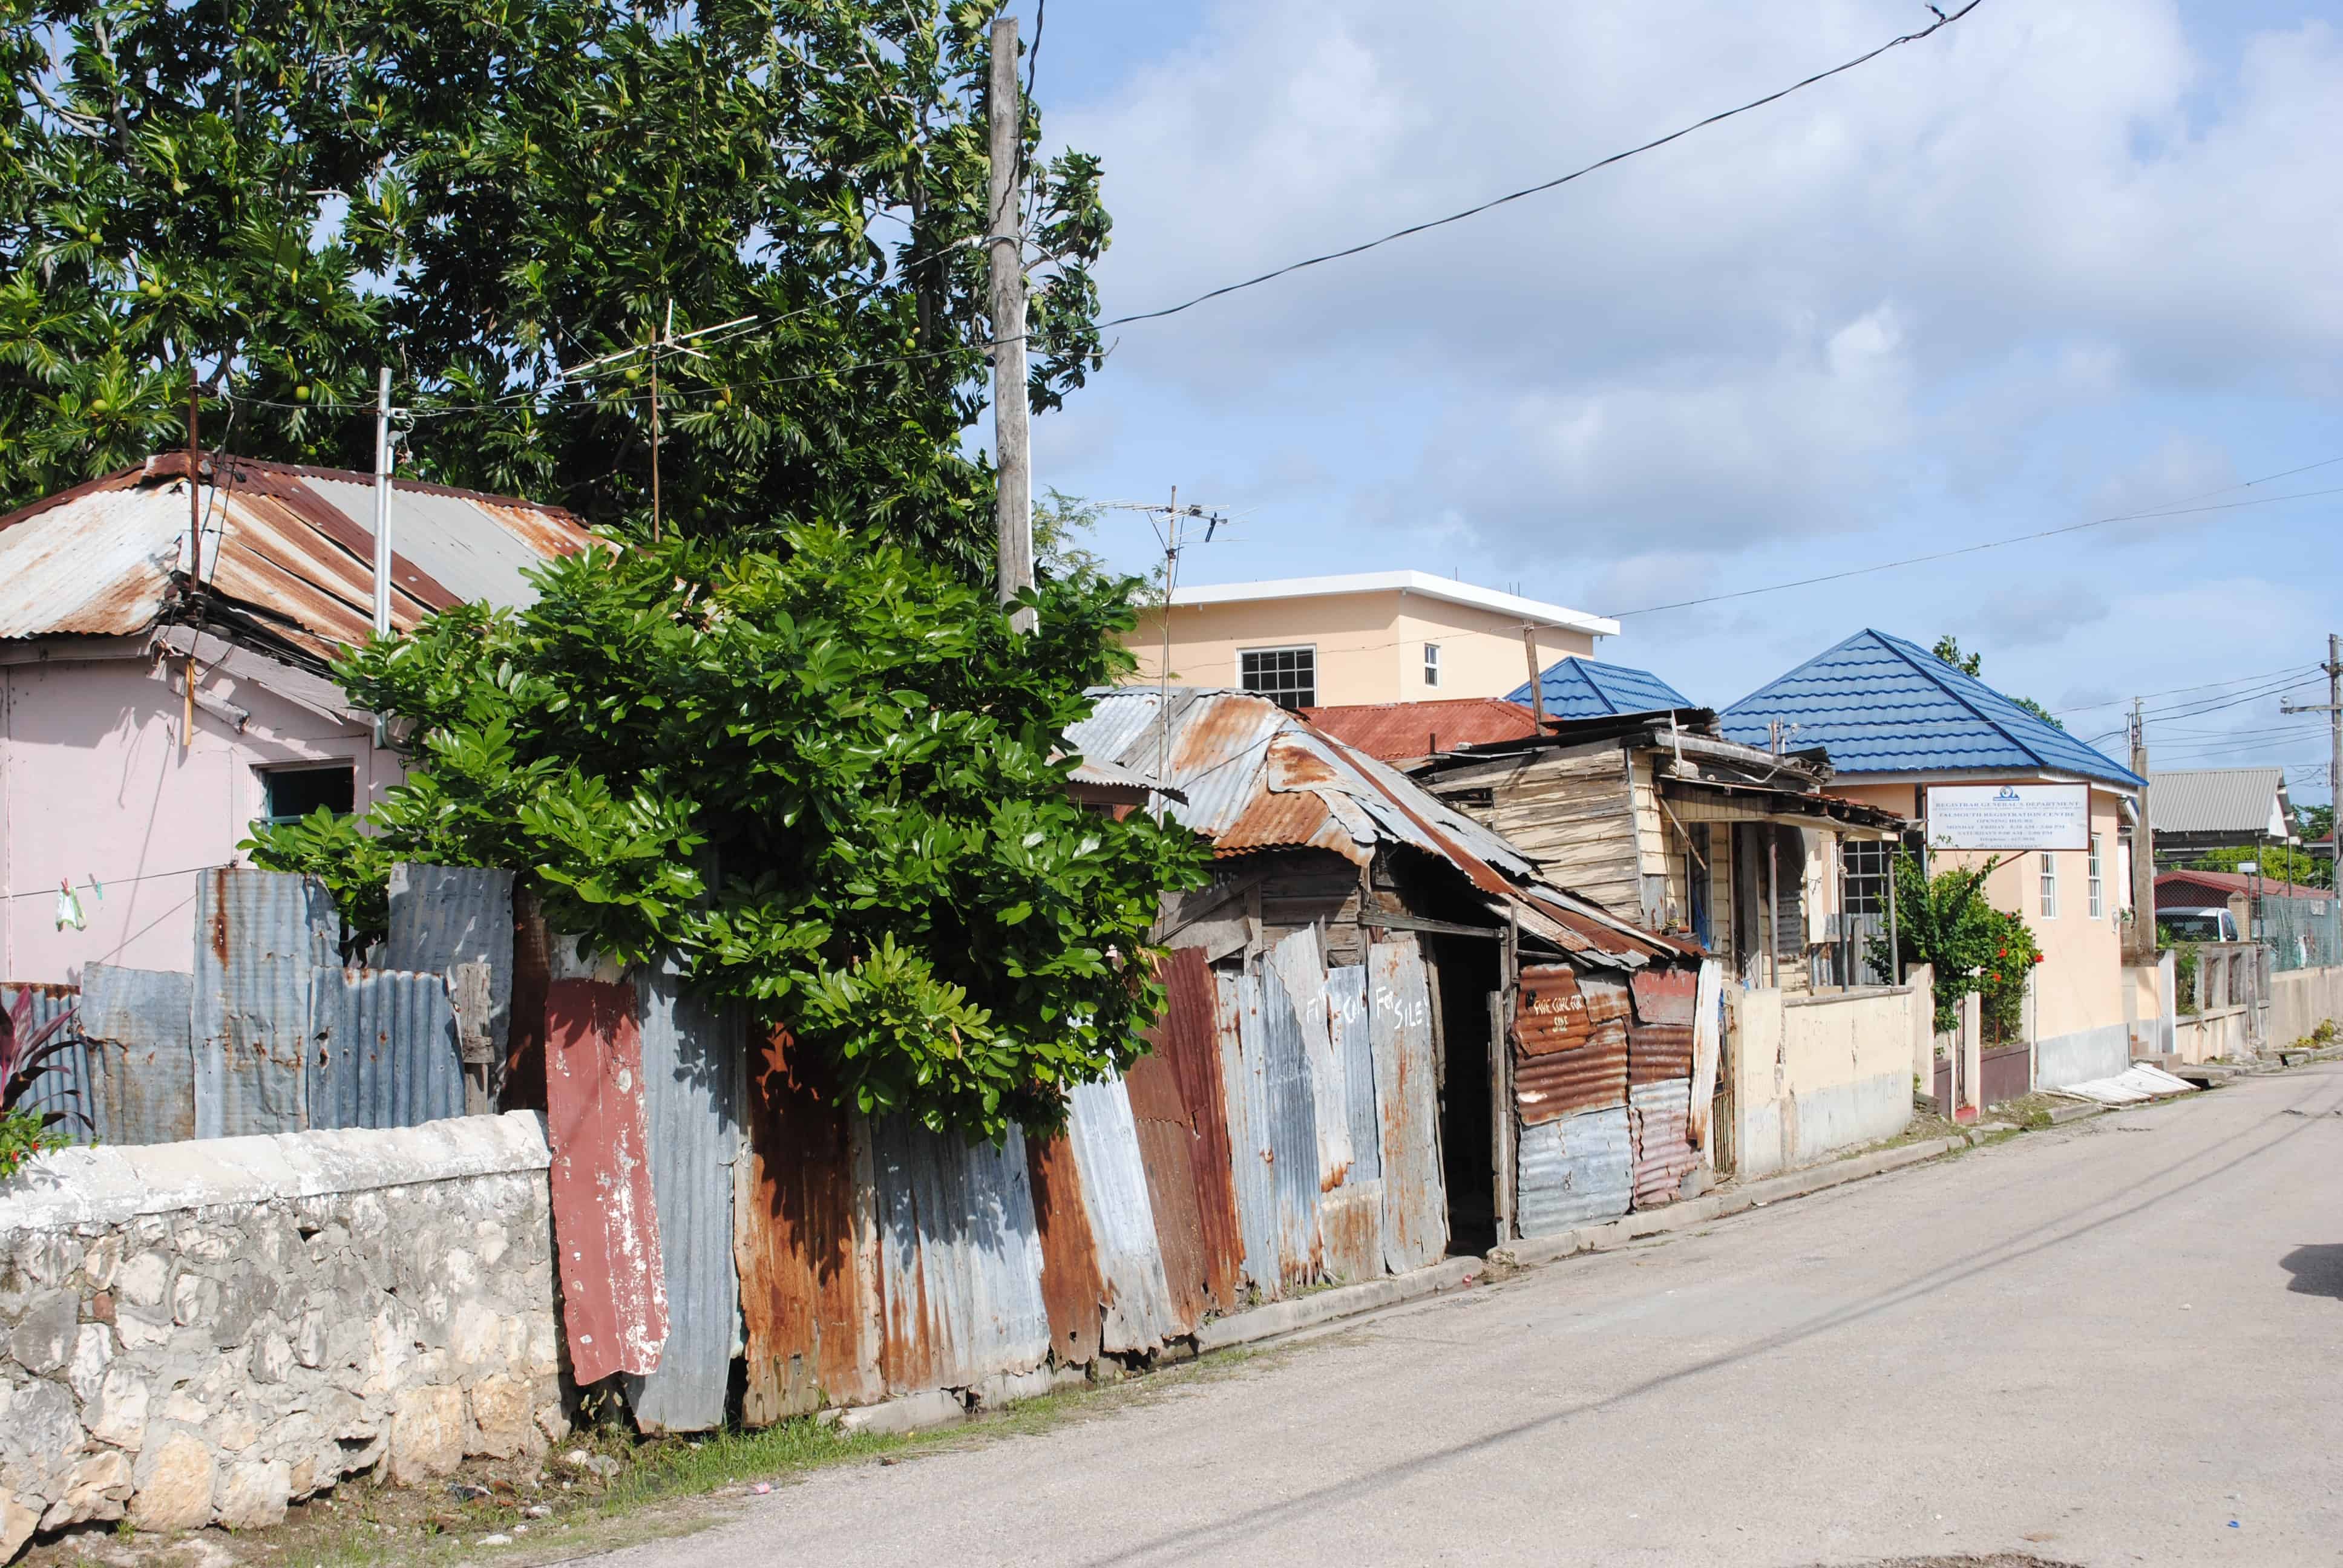 Buildings in Jamaica.